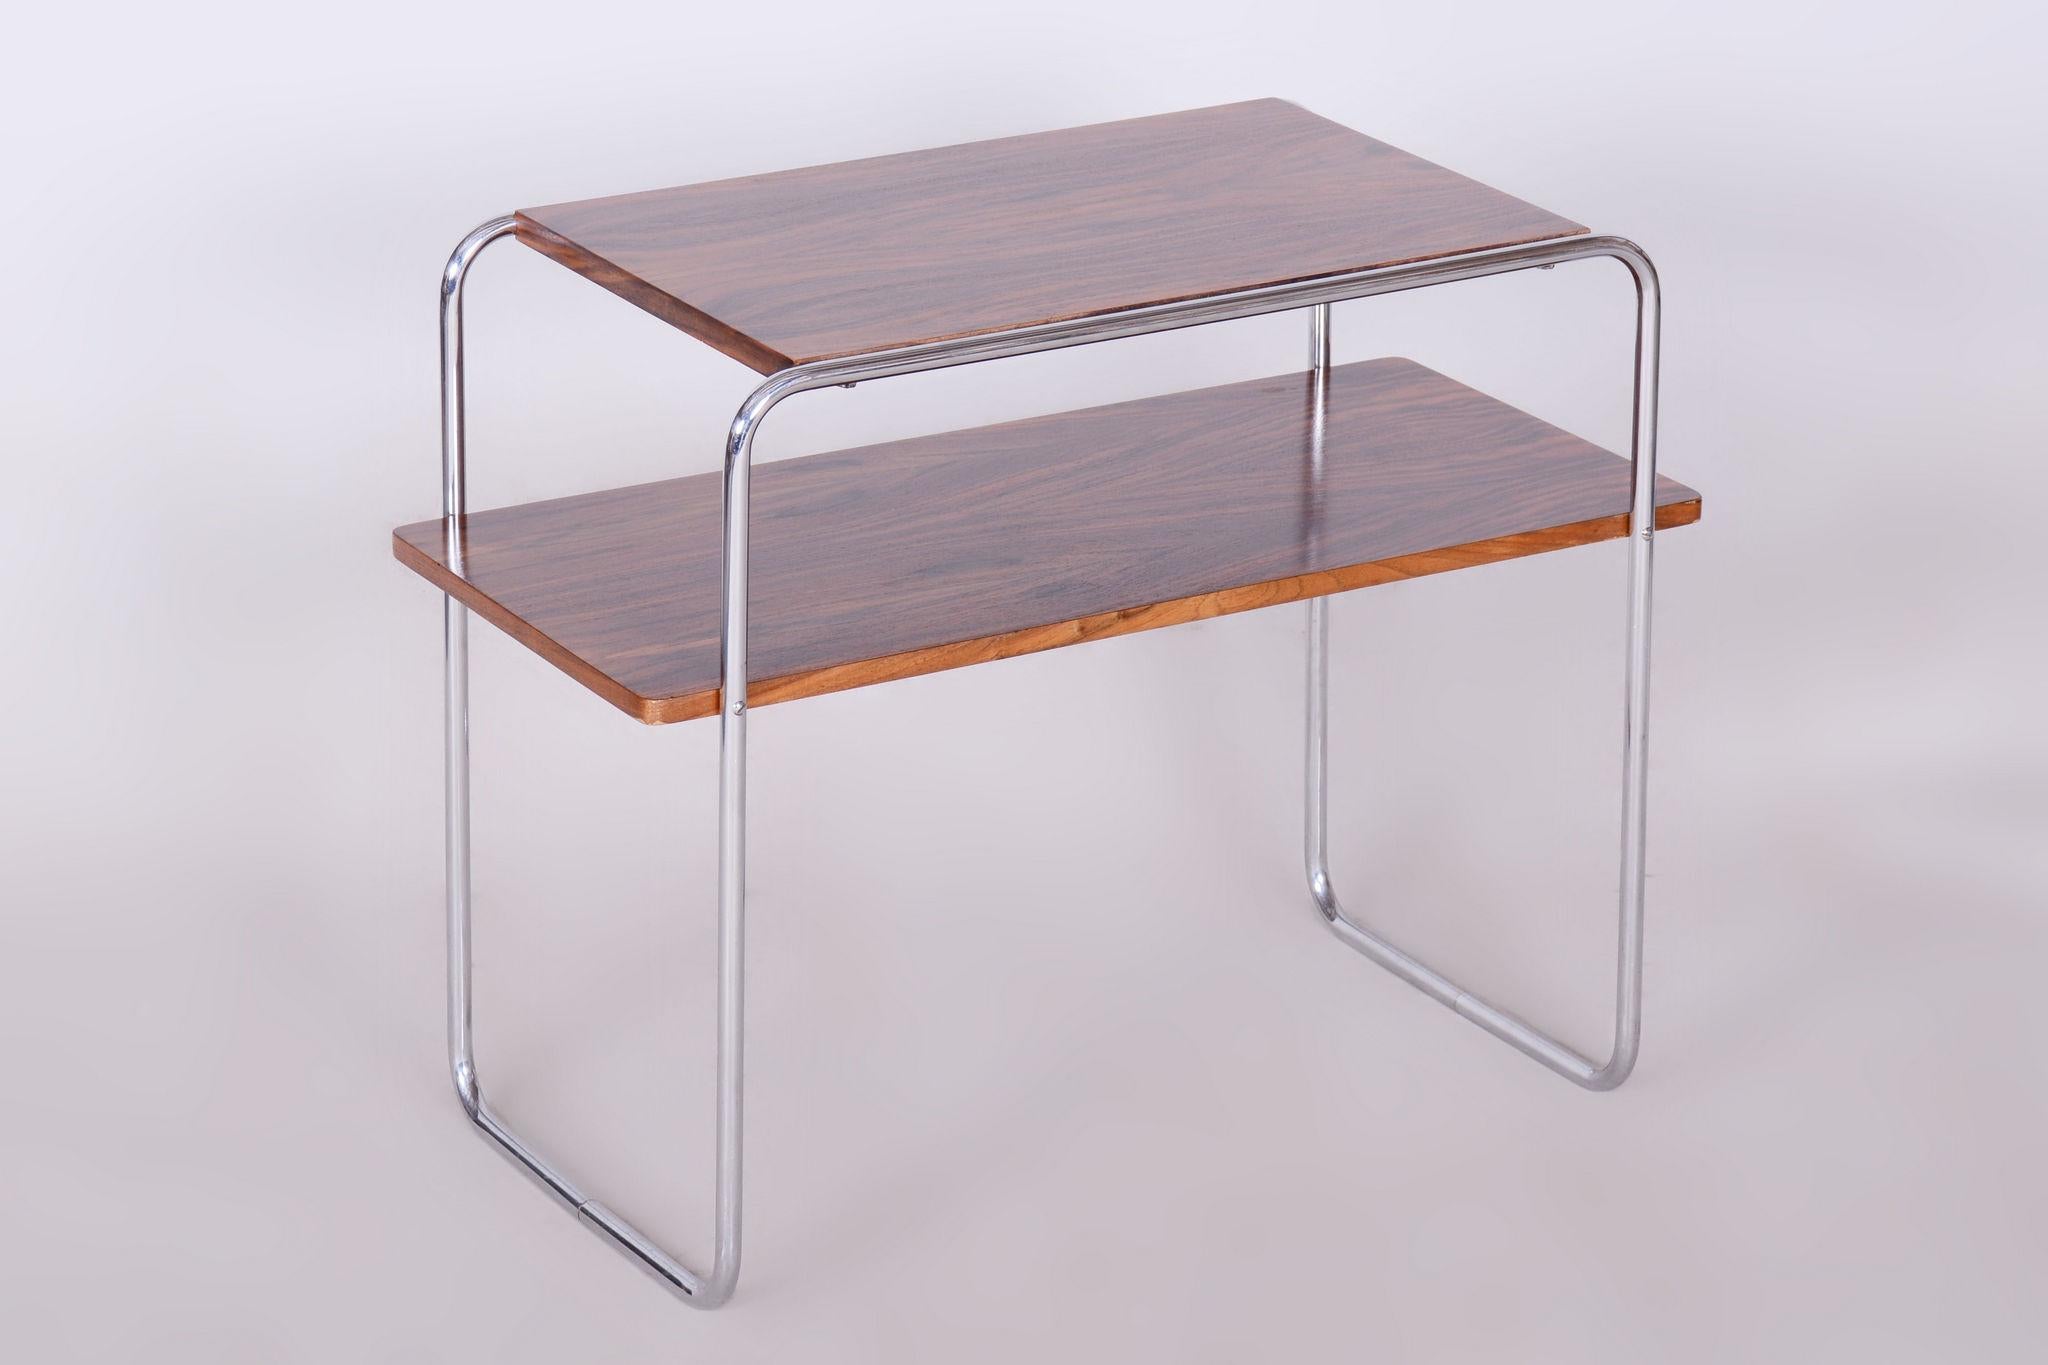 Restored Bauhaus Side Table, Hynek Gottwald, Walnut, Chrome, Czechia, 1930s For Sale 2